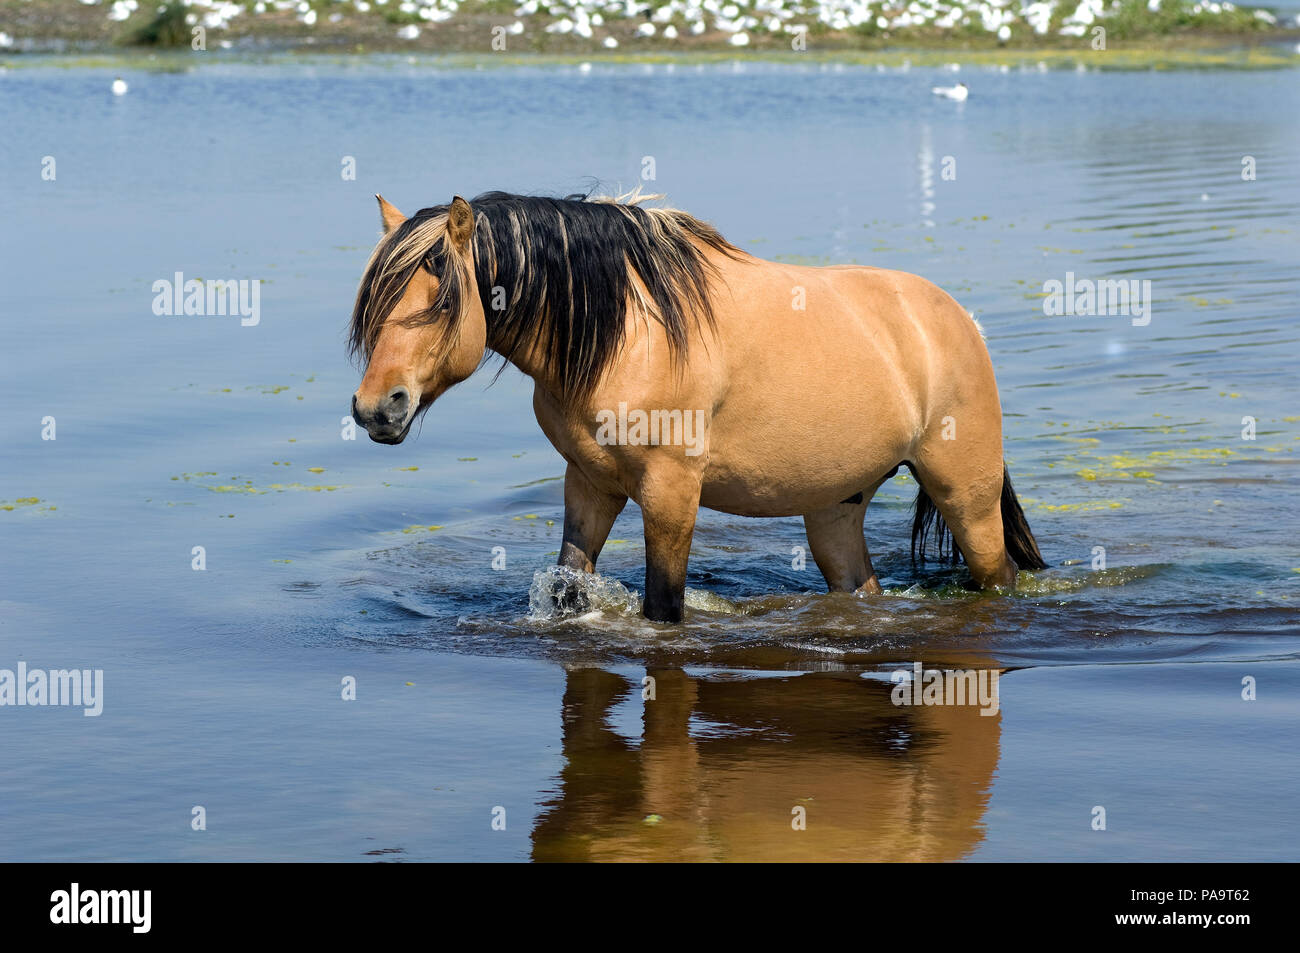 Henson's Horse - Crossing the water Cheval Henson - Traversant l'eau Equus caballus Stock Photo